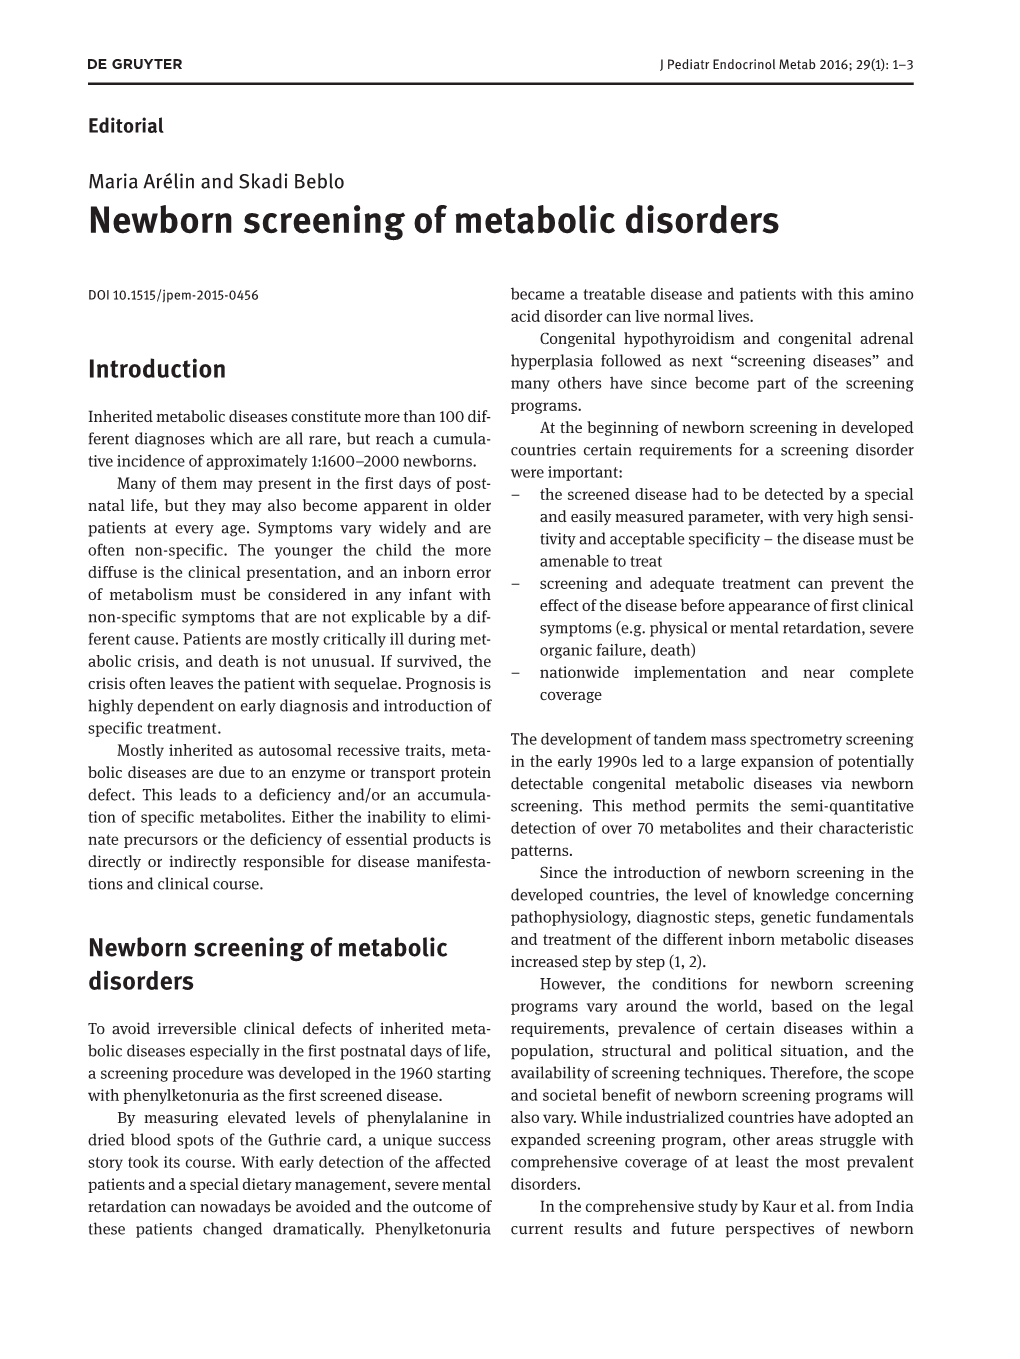 Newborn Screening of Metabolic Disorders